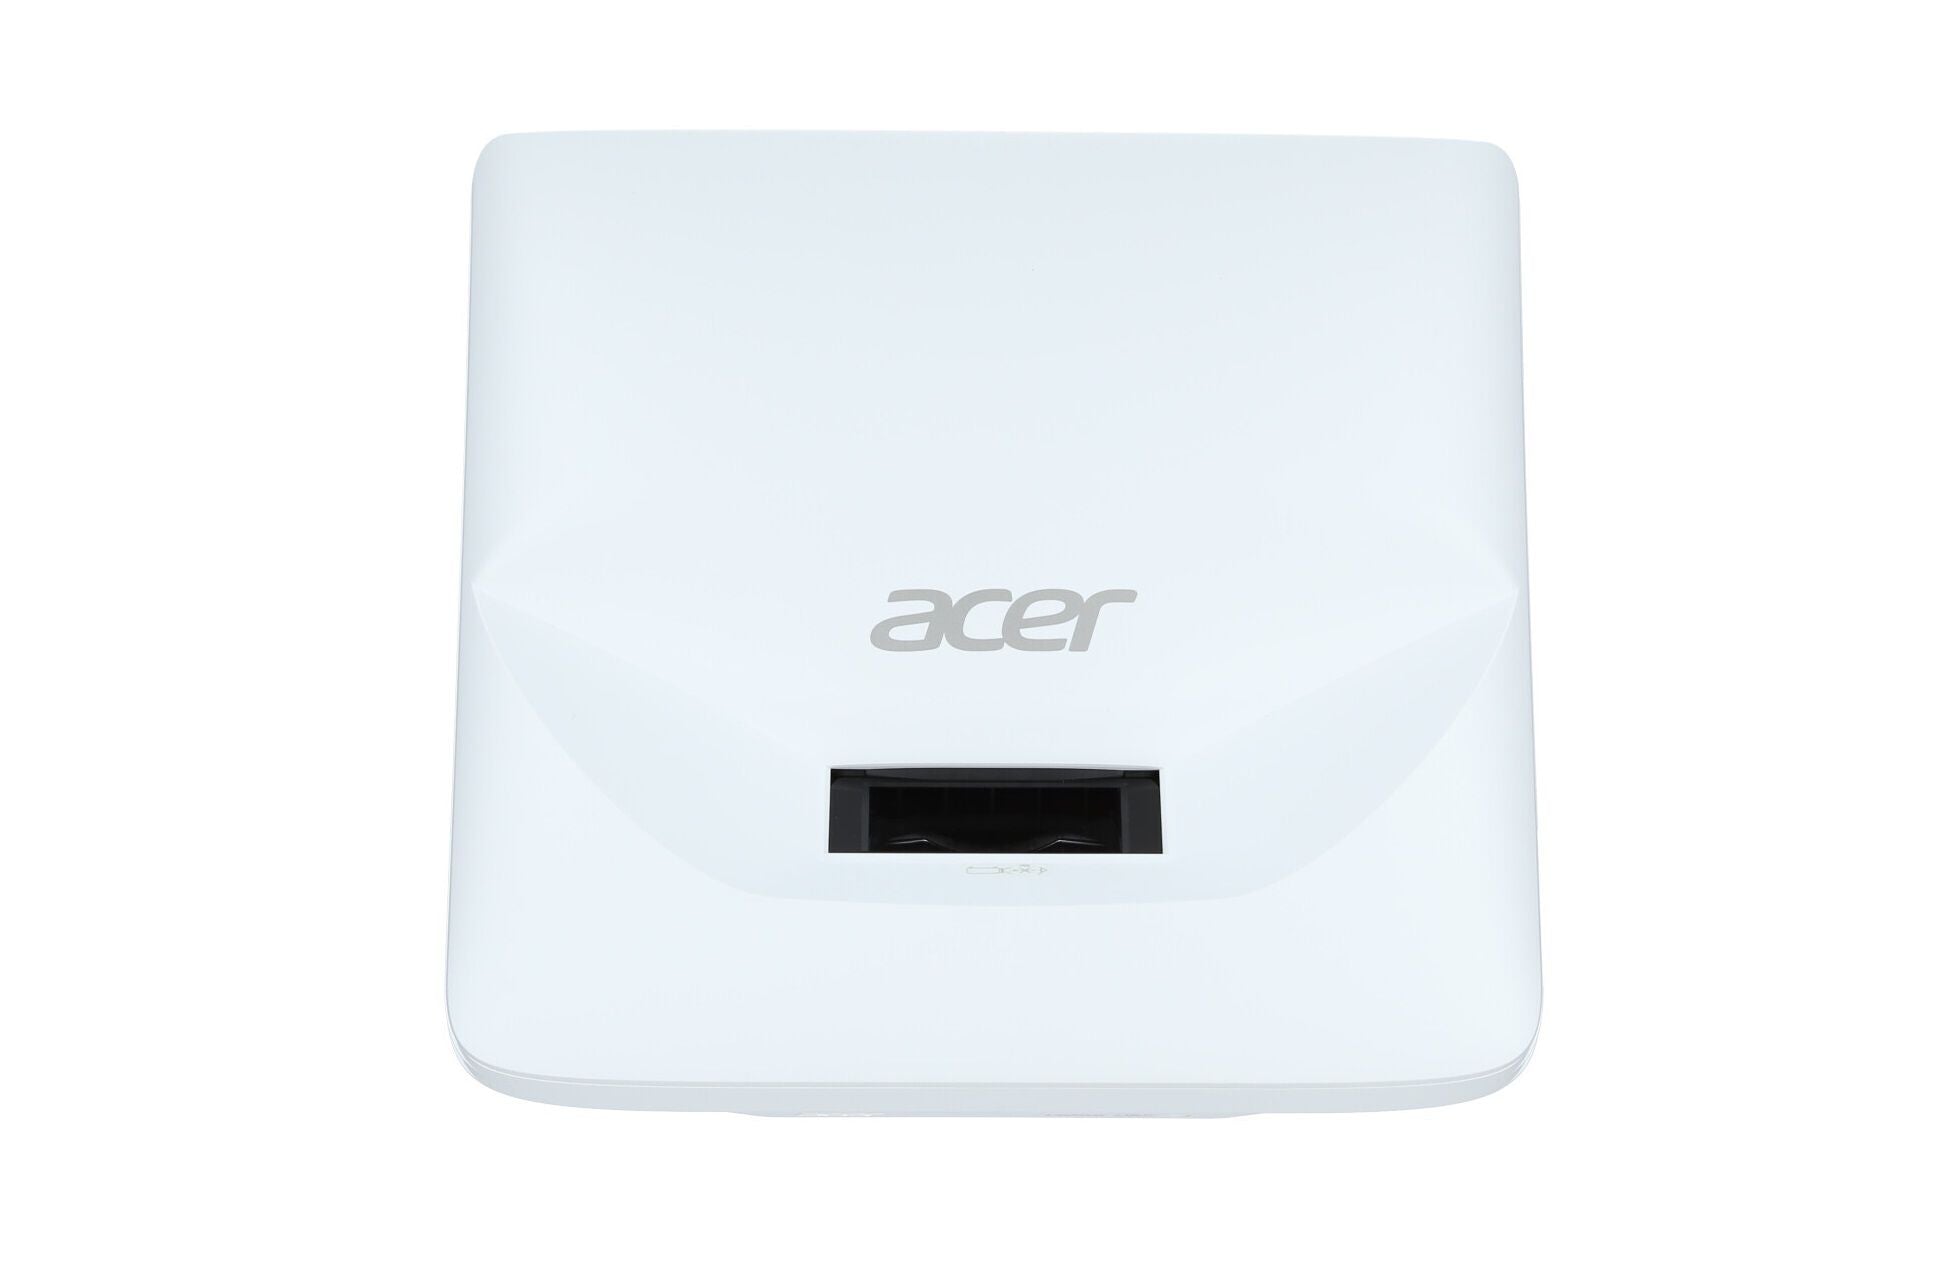 Acer ApexVision L811 UST Home Cinema Projector